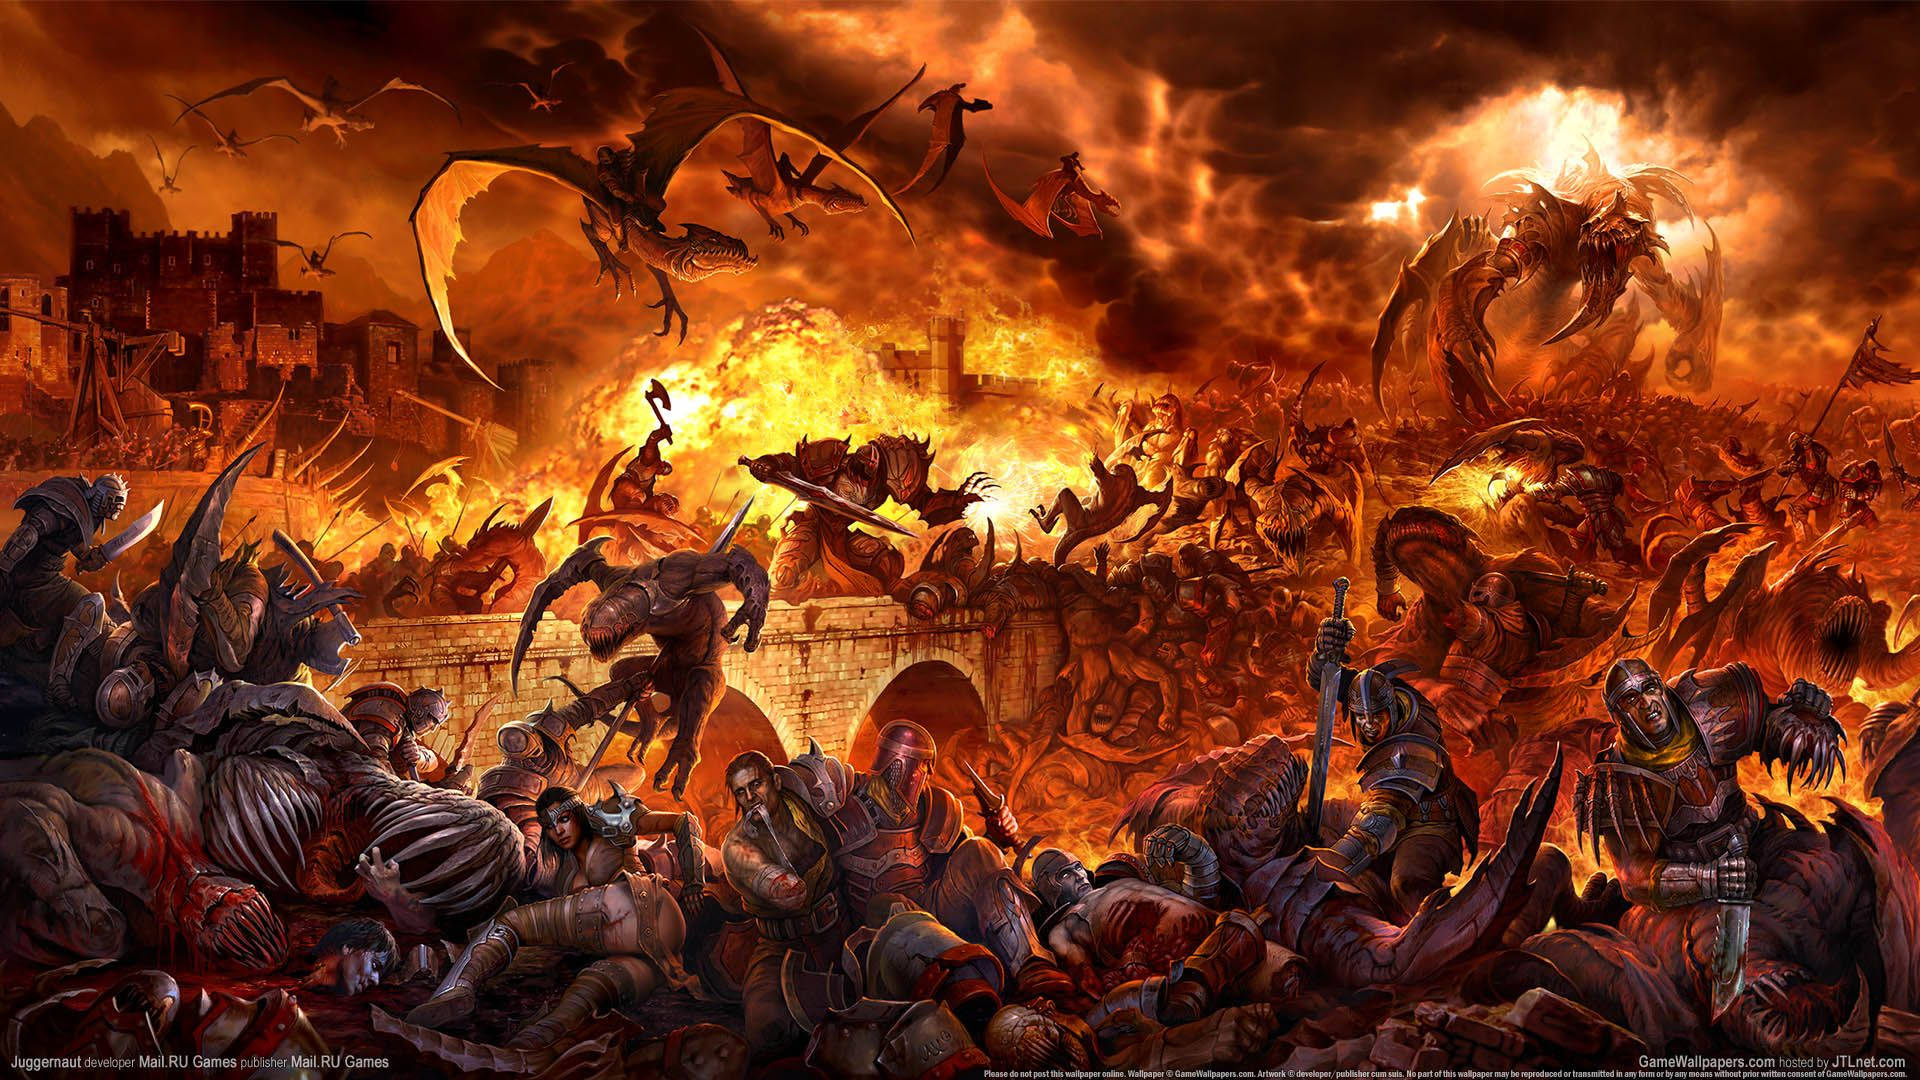 Juggernaut Flaming City Background